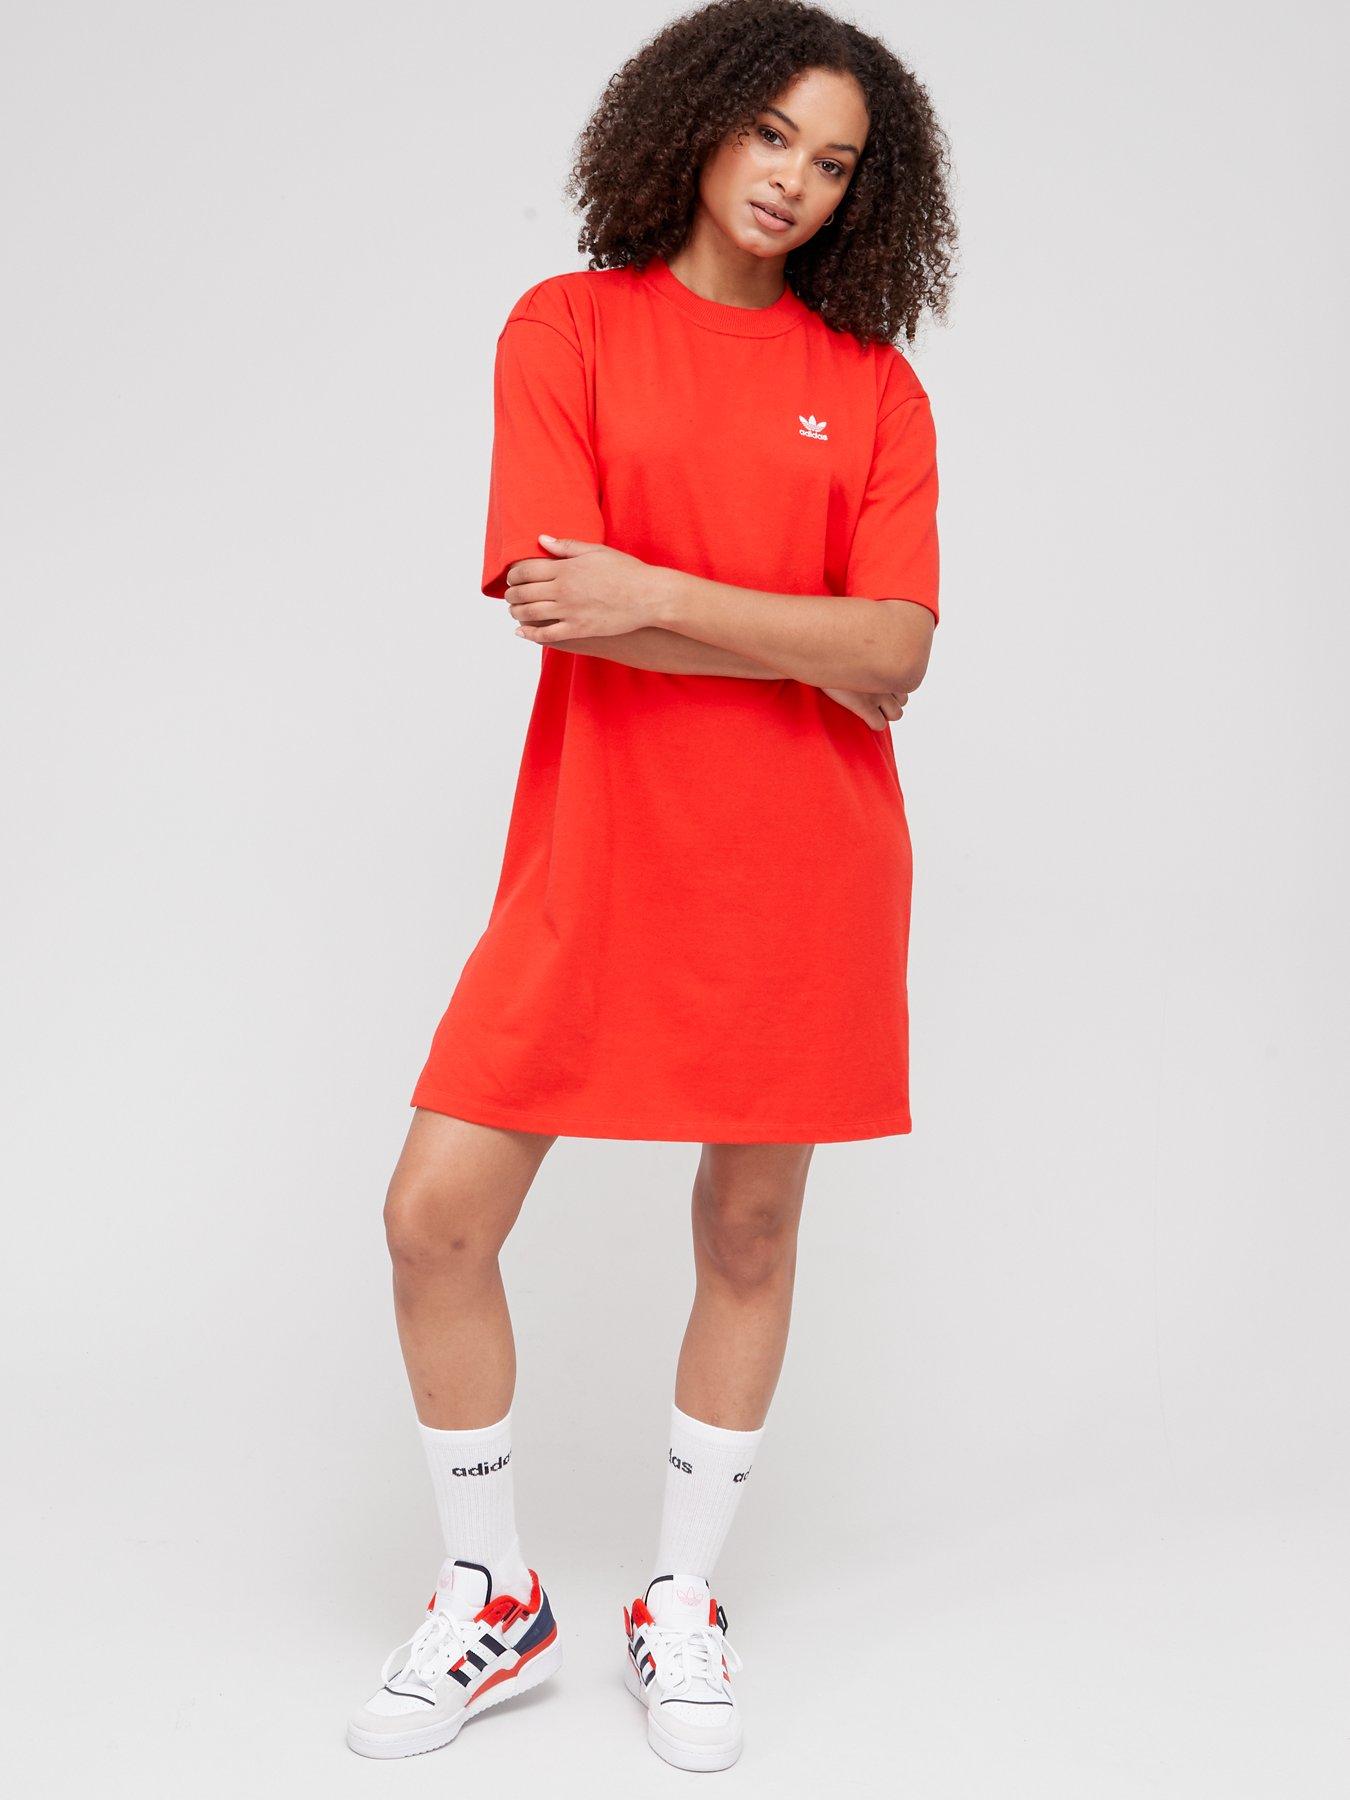 adidas T-Shirt Dress - Red | very.co.uk